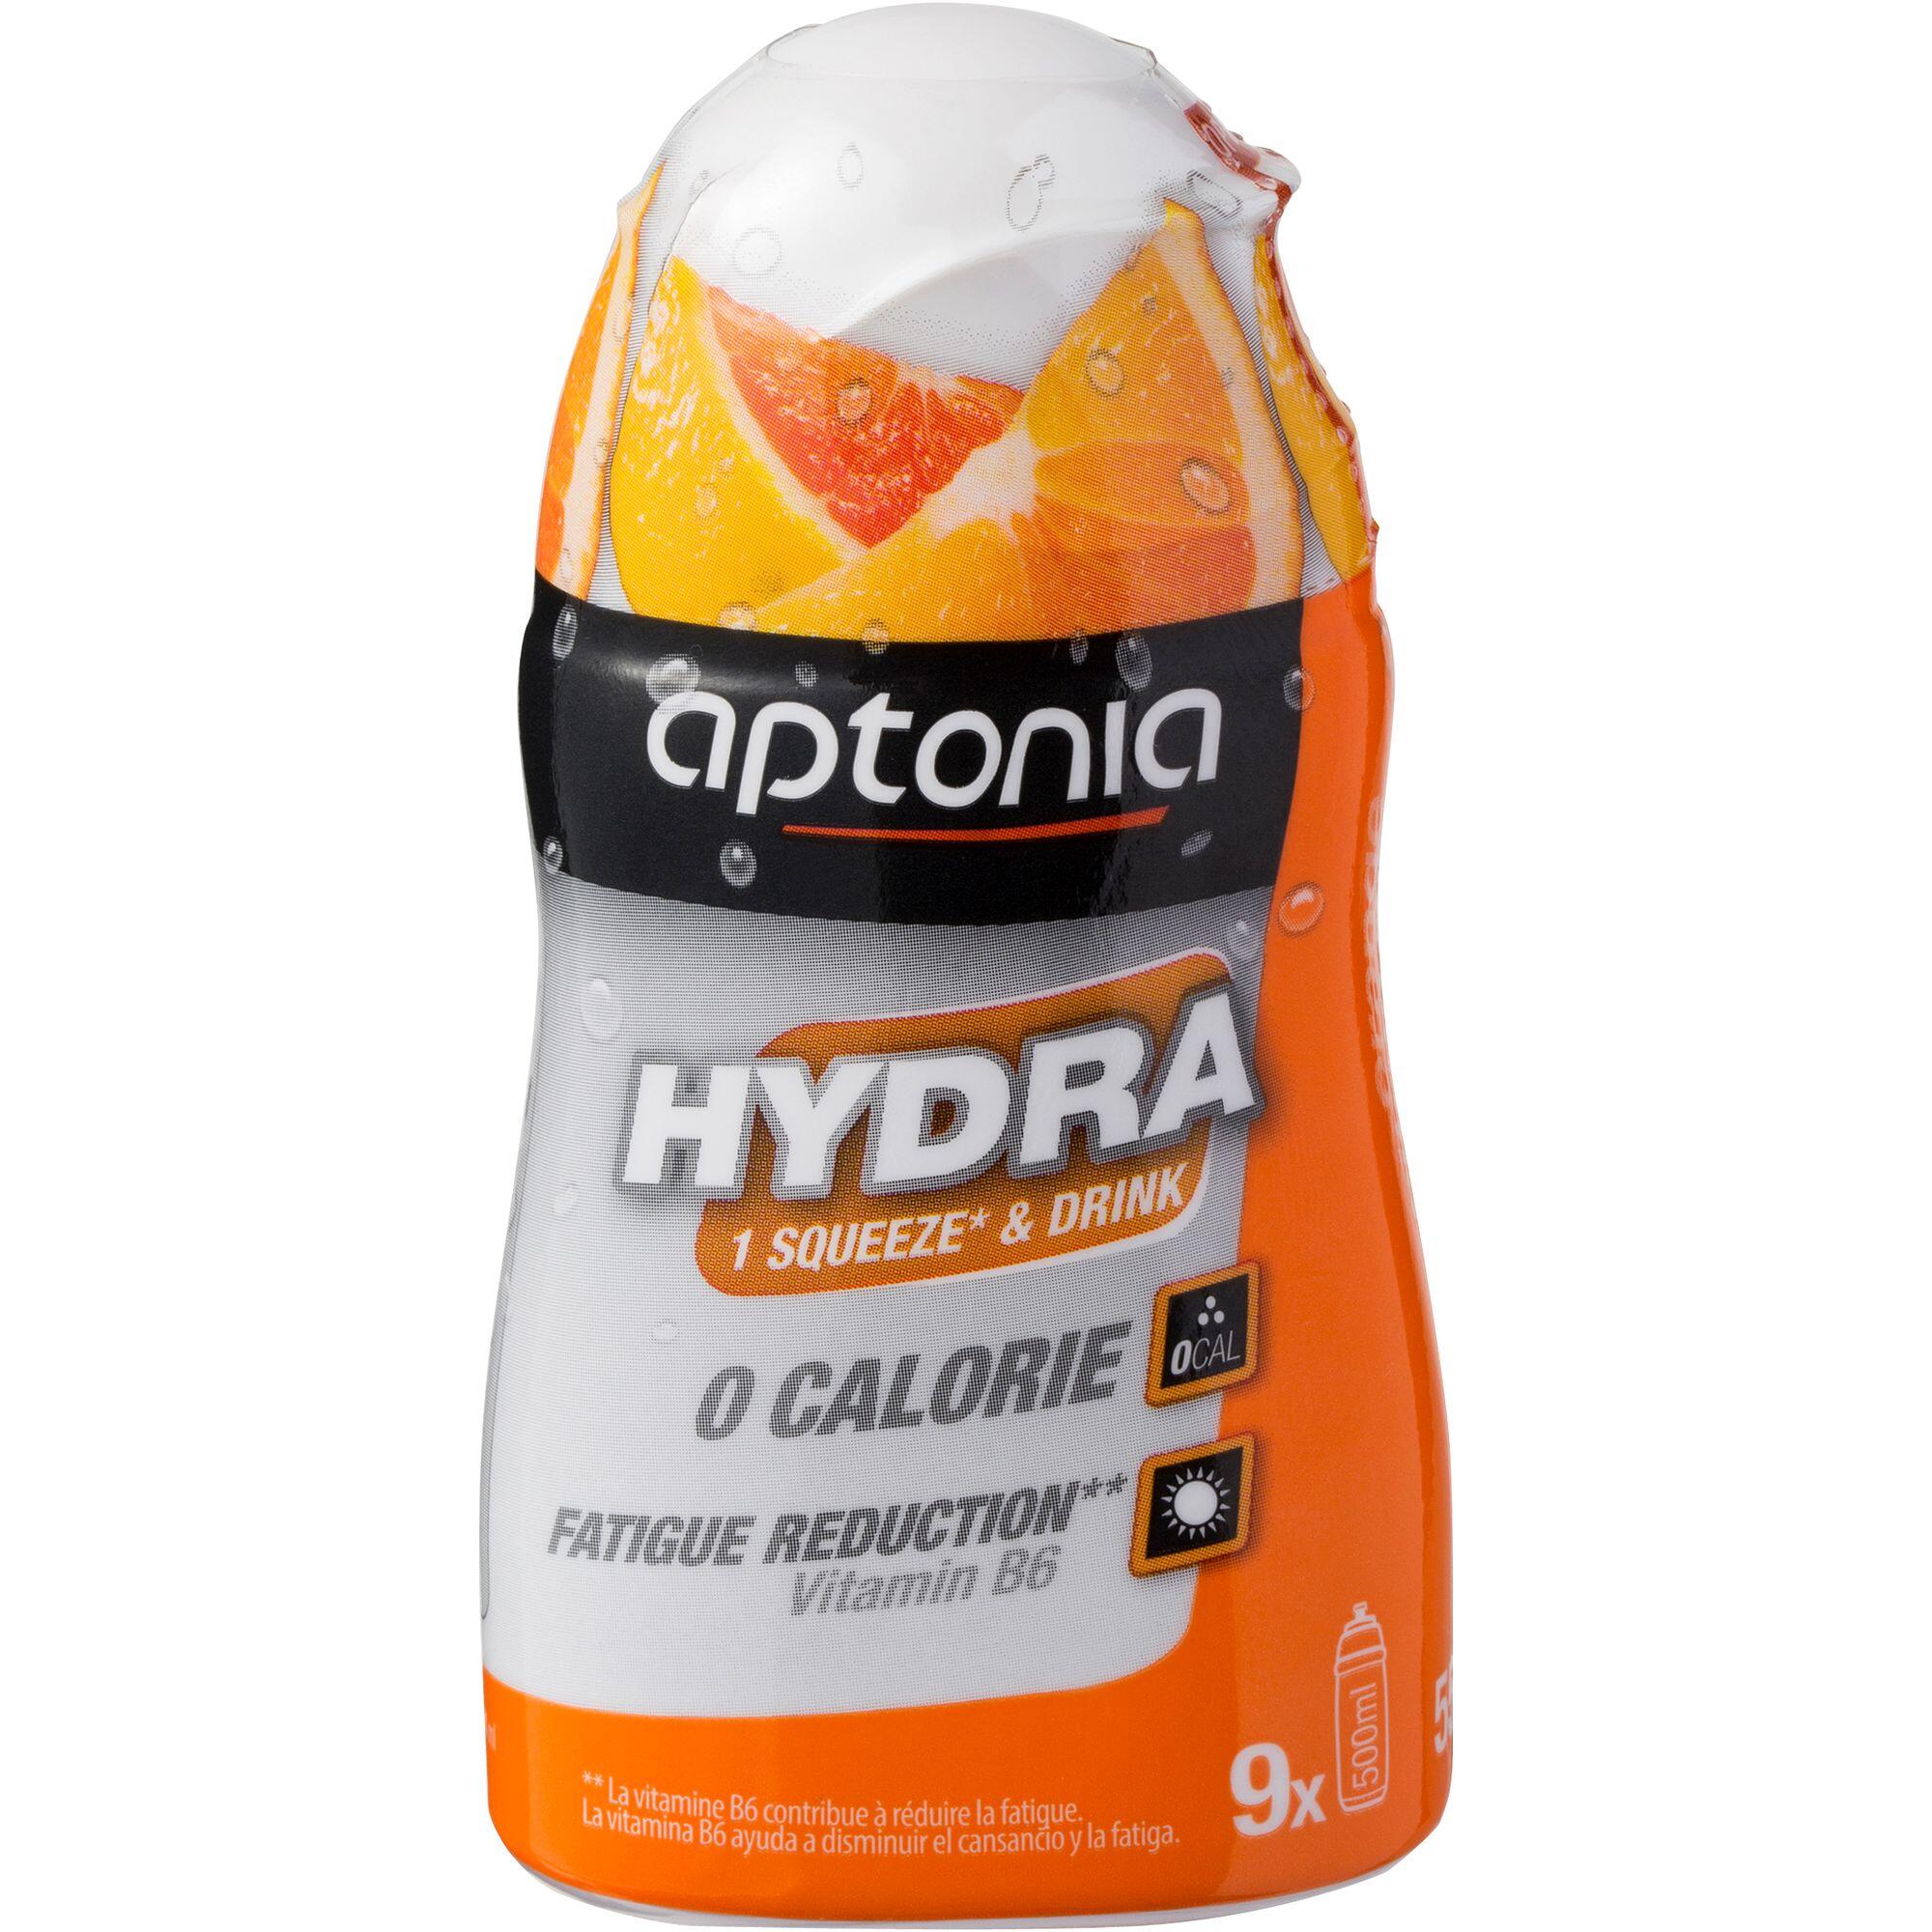 MIX&DRINK Hydra Squeeze Orange Citrus 1/7